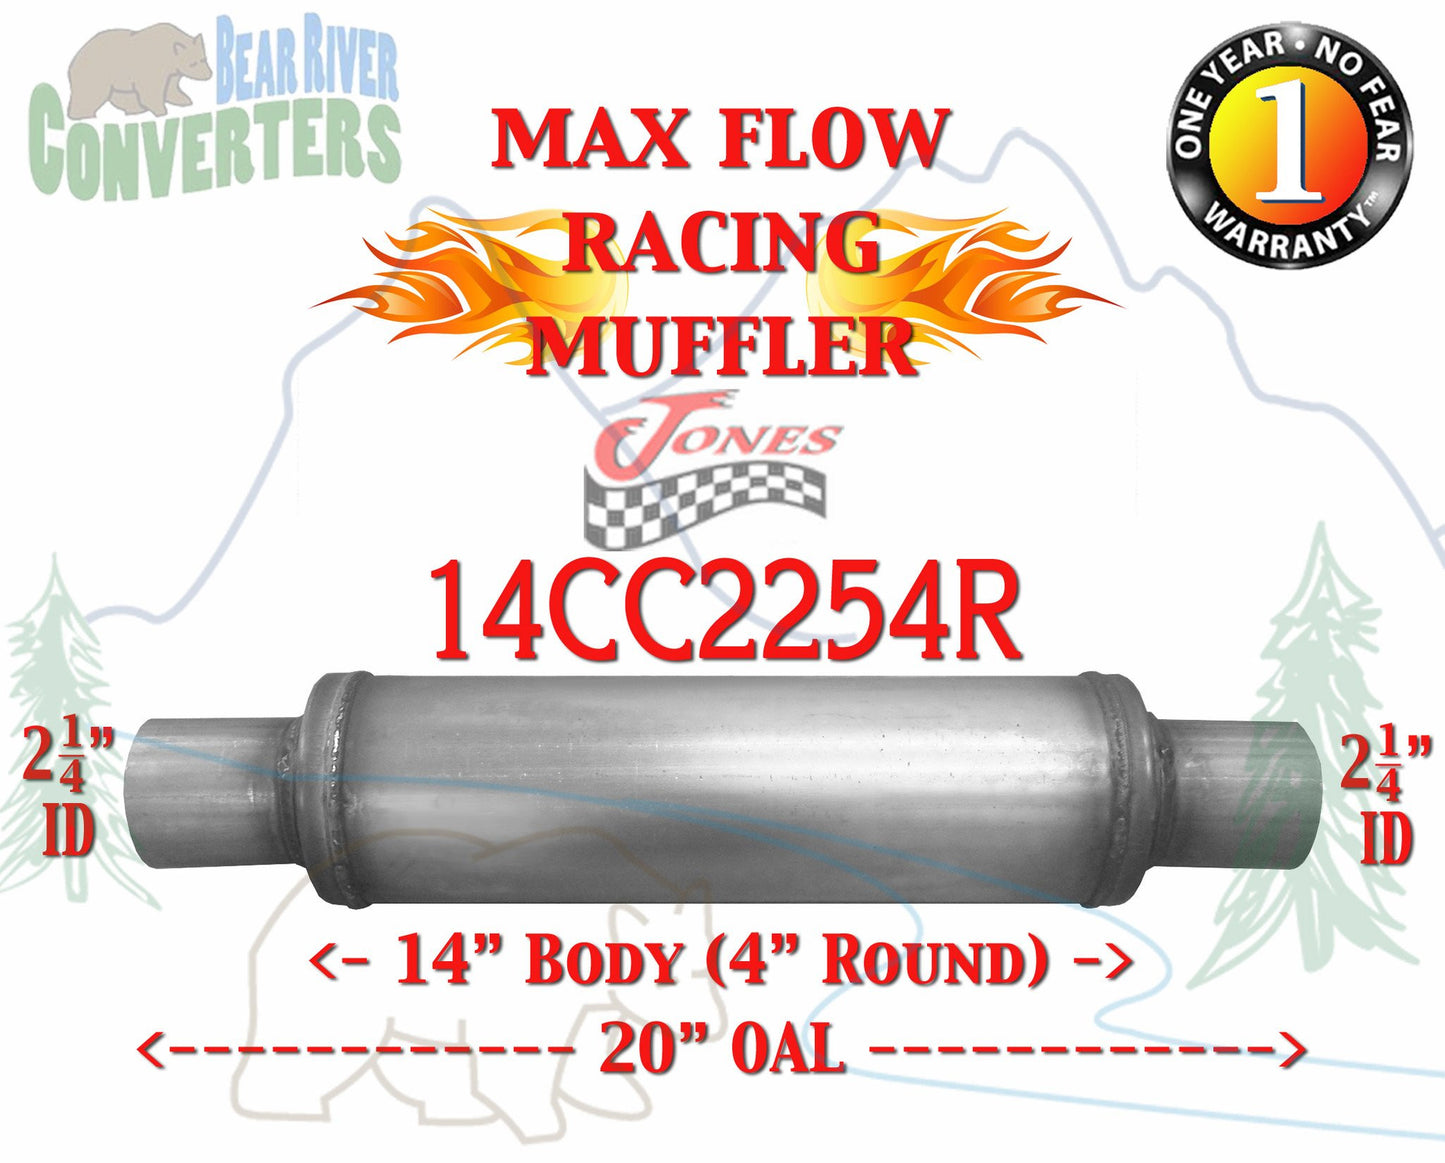 14CC2254R Jones JXS0445 Max Flow Racing Muffler 14” Round 2 1/4” 2.25” Pipe Center/Center 20” OAL - Bear River Converters